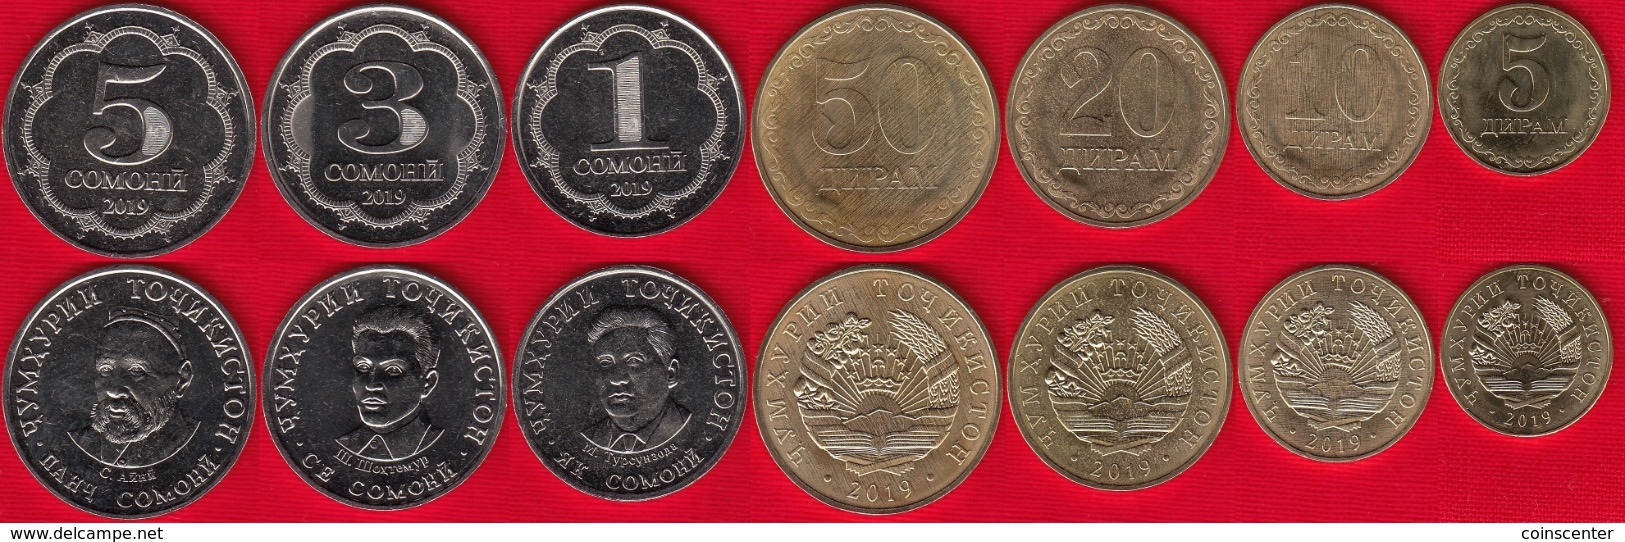 1 set of 9 coins UNC Ecuador coins set